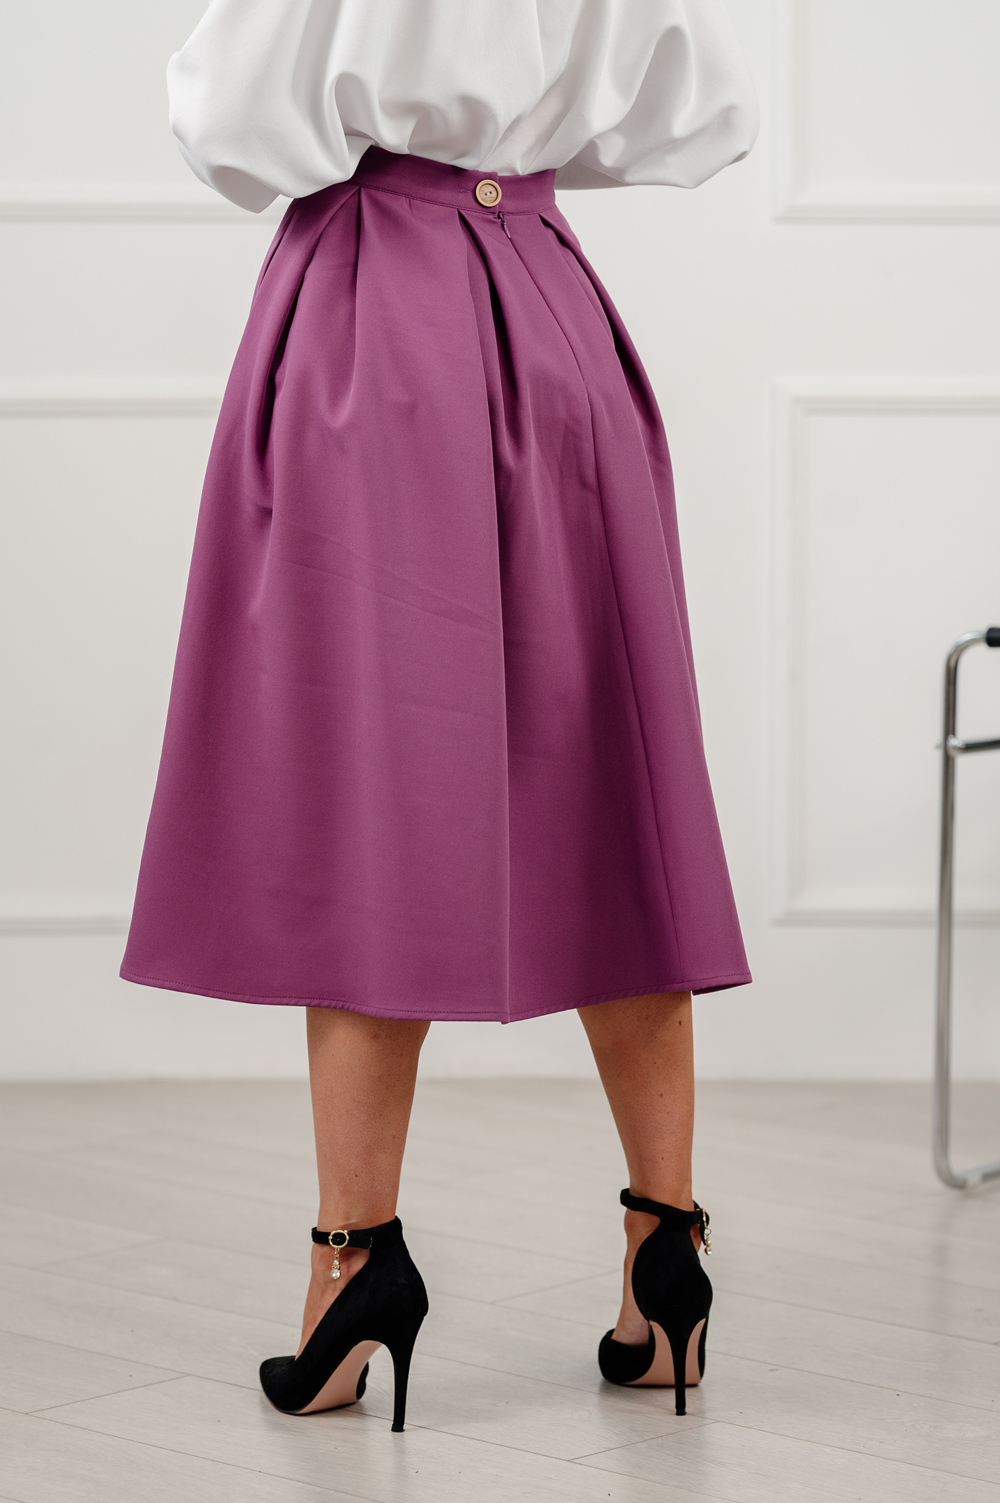 Aubergine coloured flared skirt below the knee